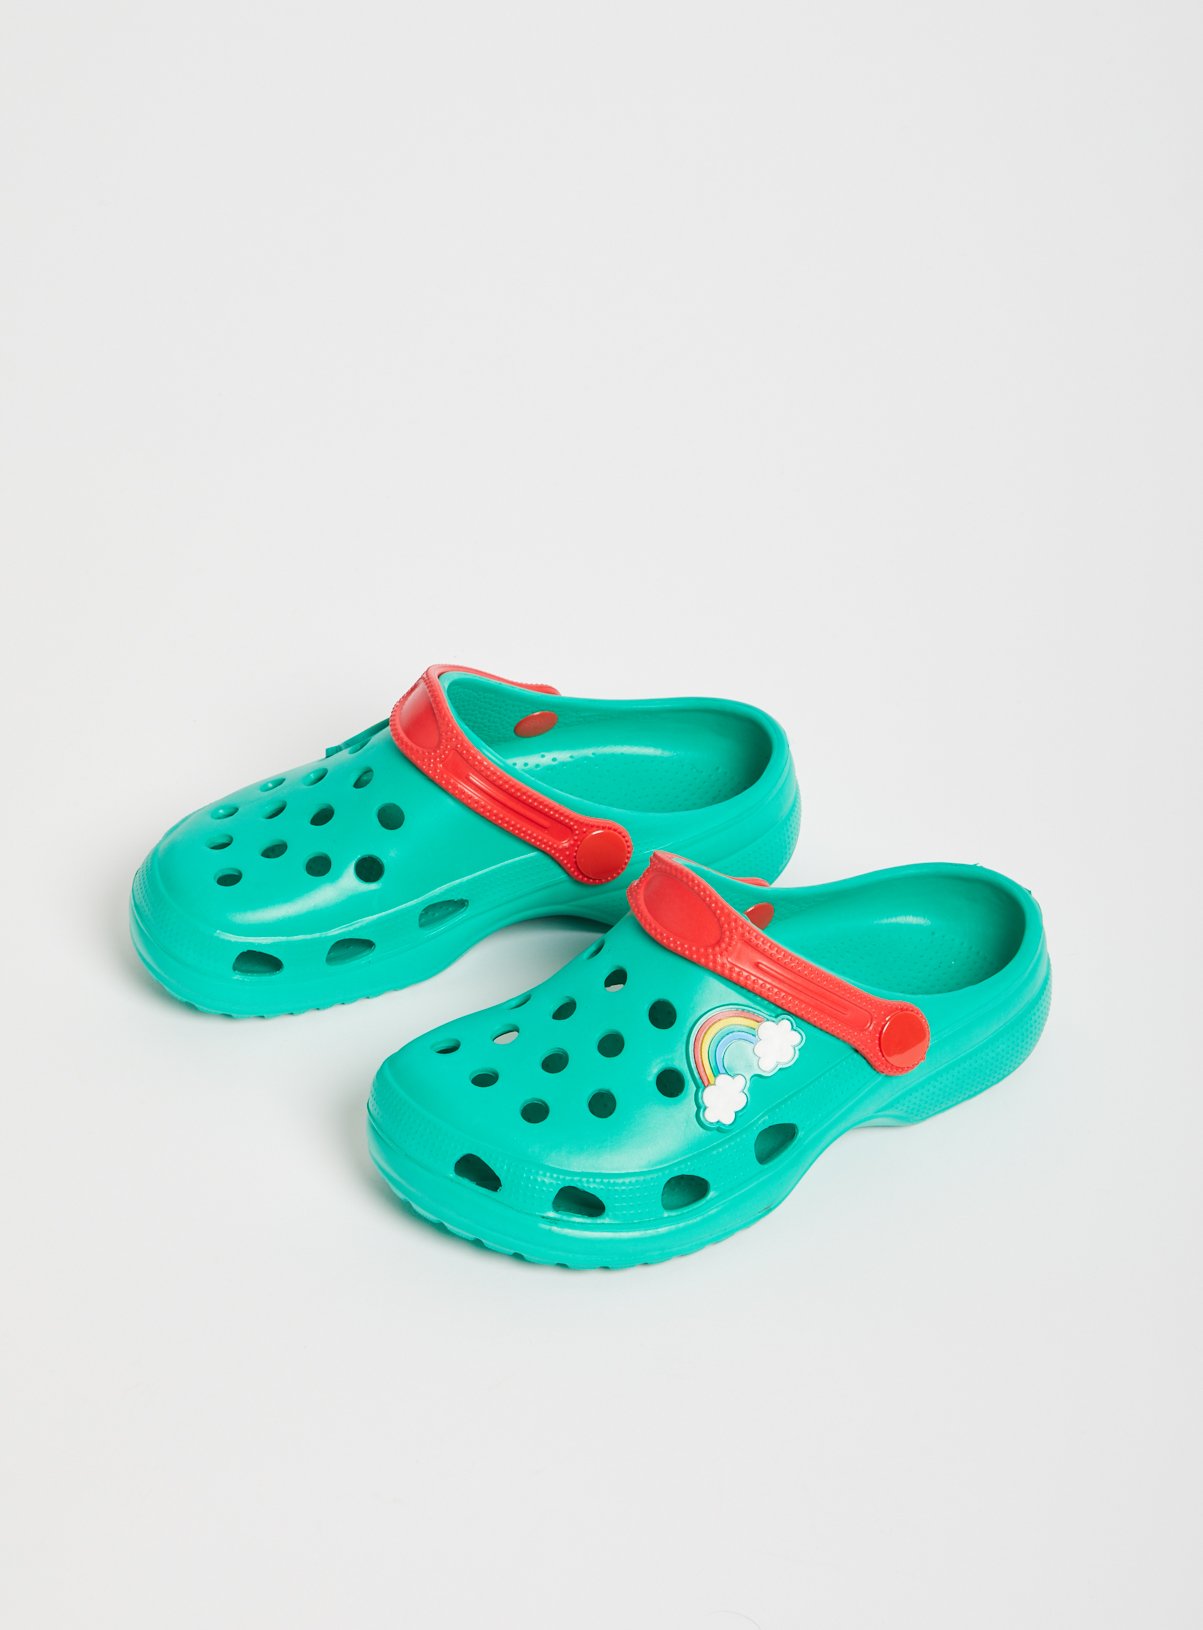 sandugo slippers price